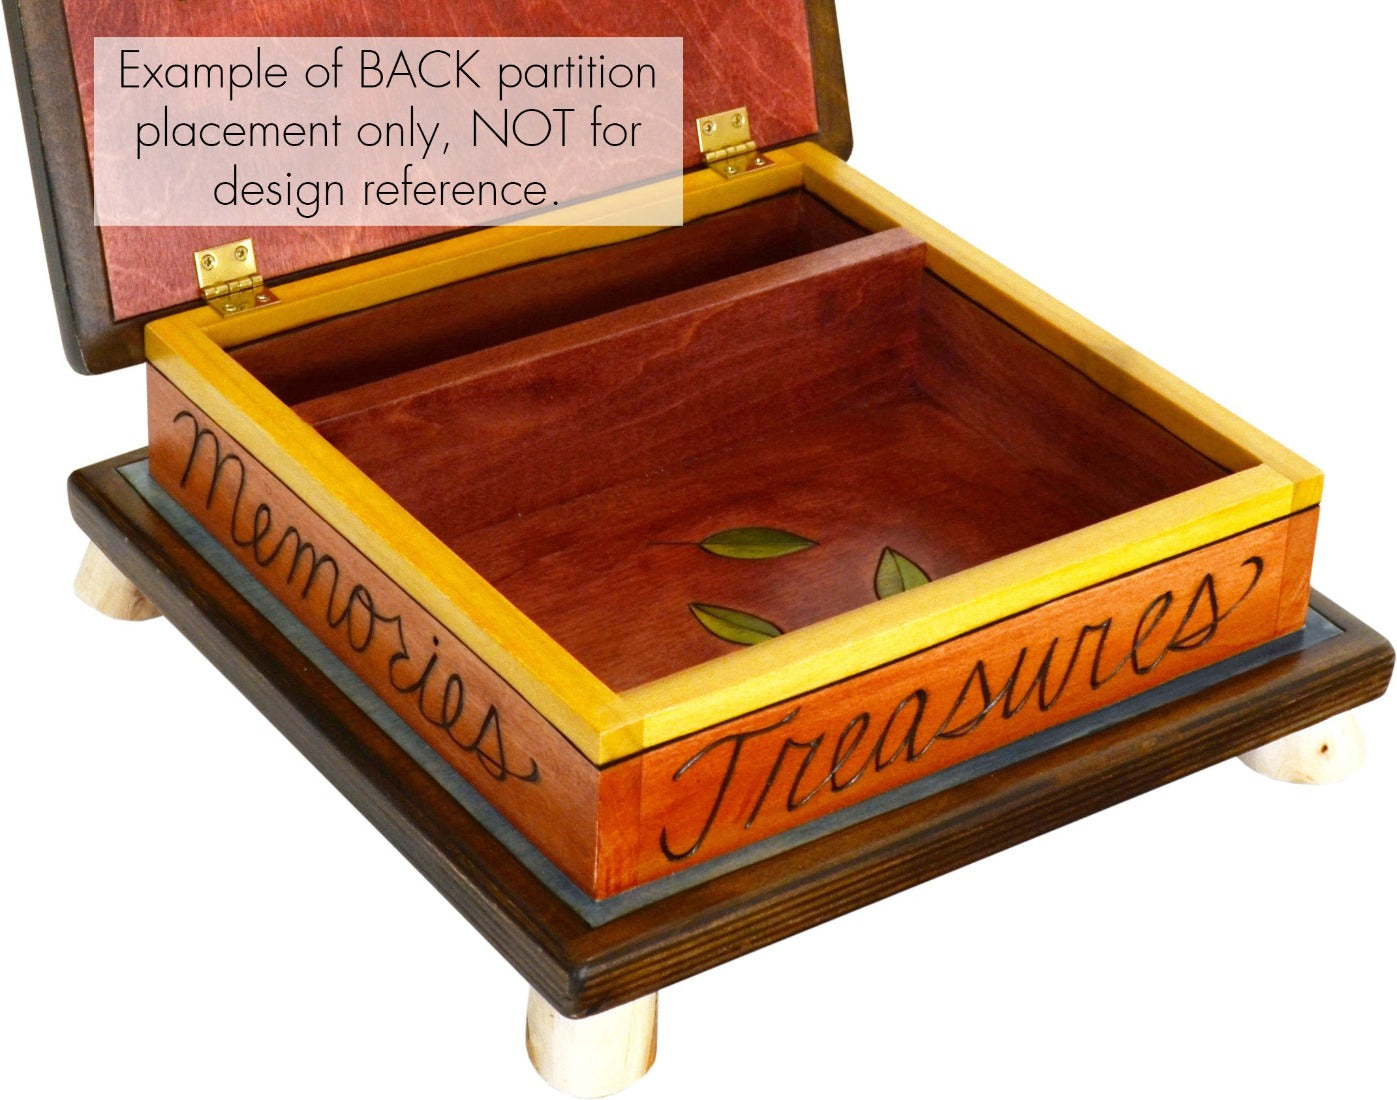 Wooden Trinket Box Hinged Small Keepsake Jewelry Treasure 